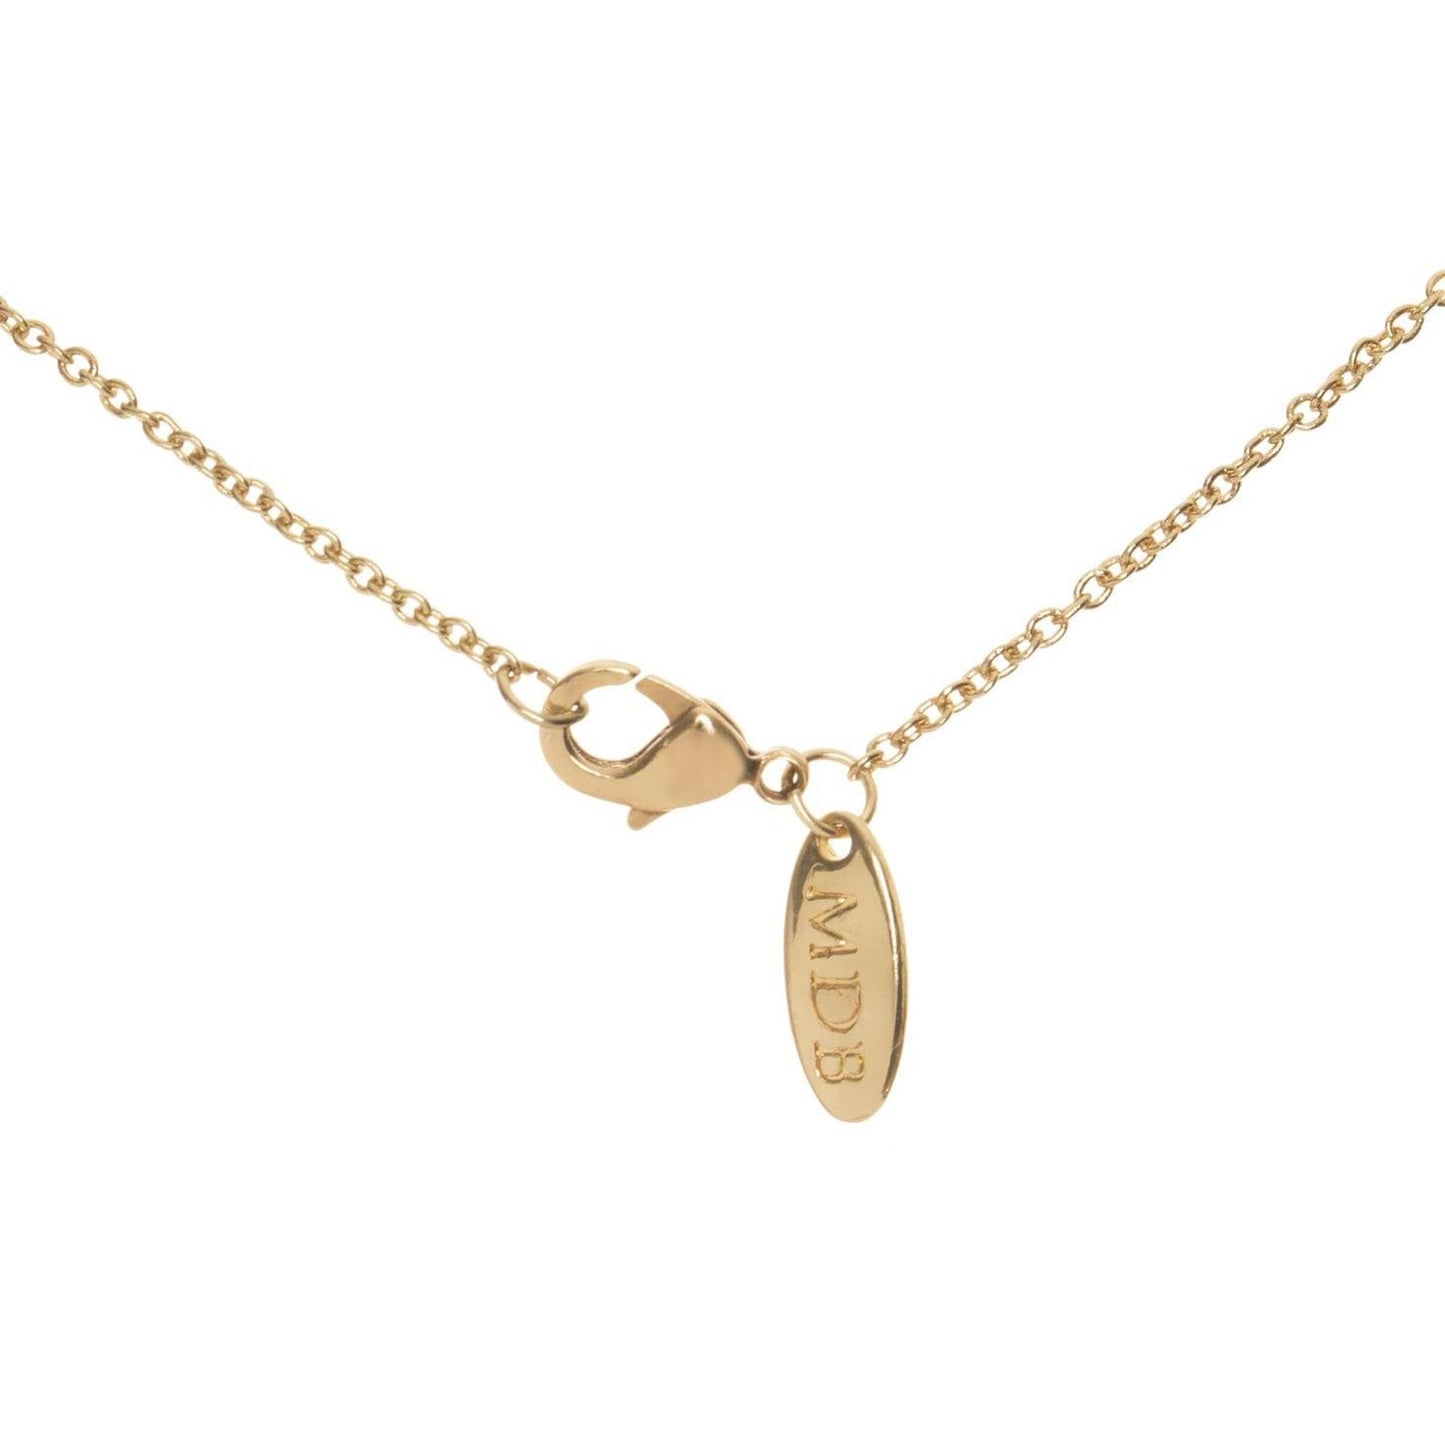 Lumiela Personalized Nameplate Jordan Necklace in Gold Tone